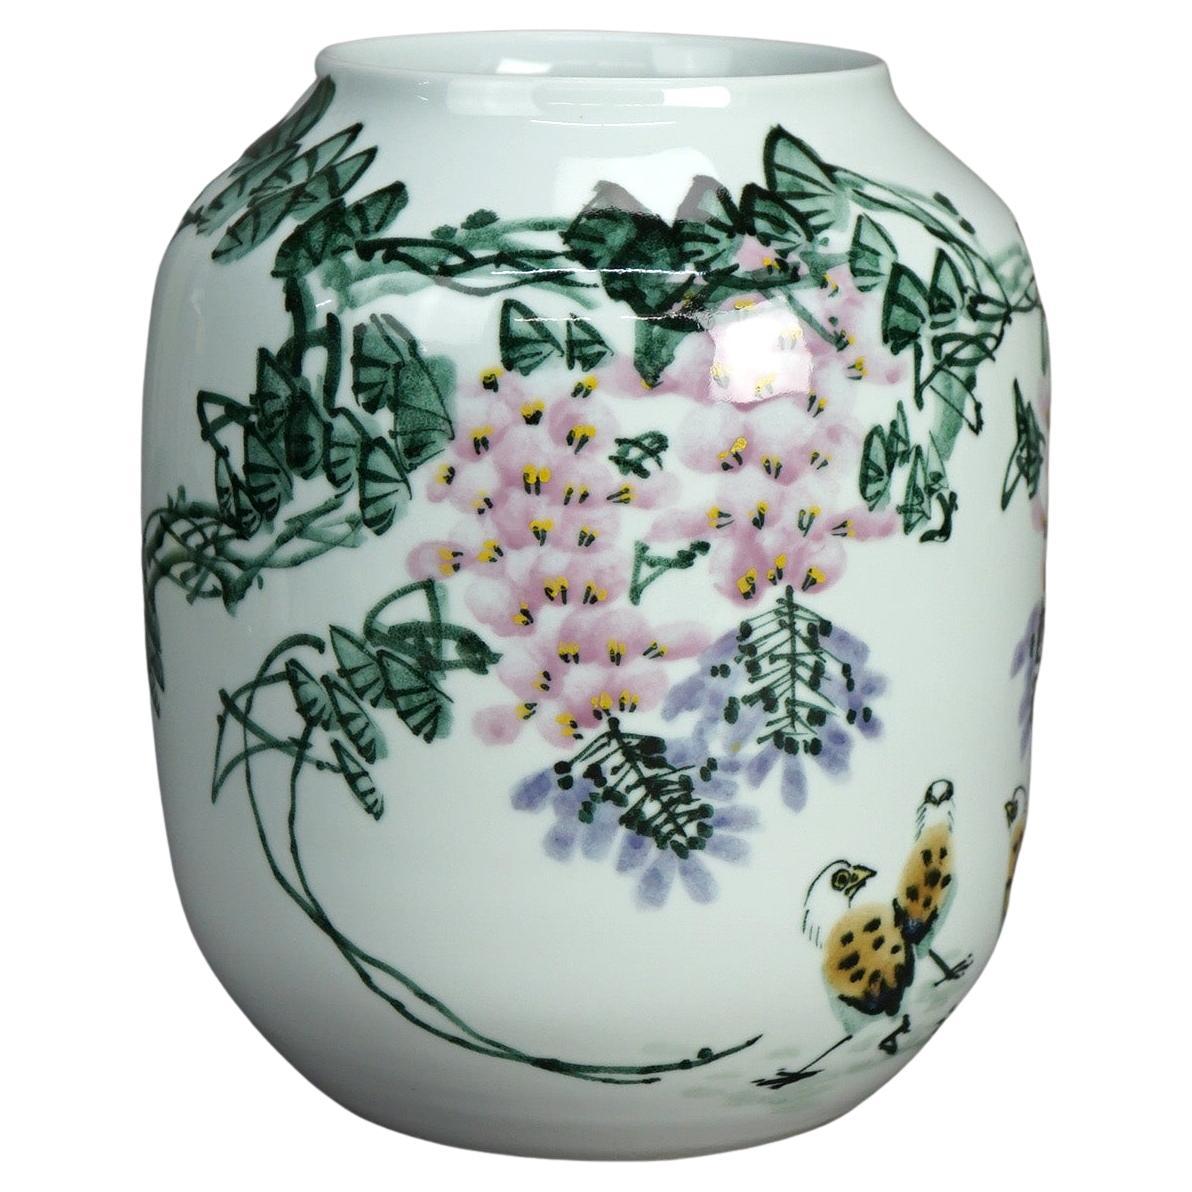 Chinese Jingdezhen Porcelain Jar Vase with Hand Painted Myrtle Design 20thC For Sale